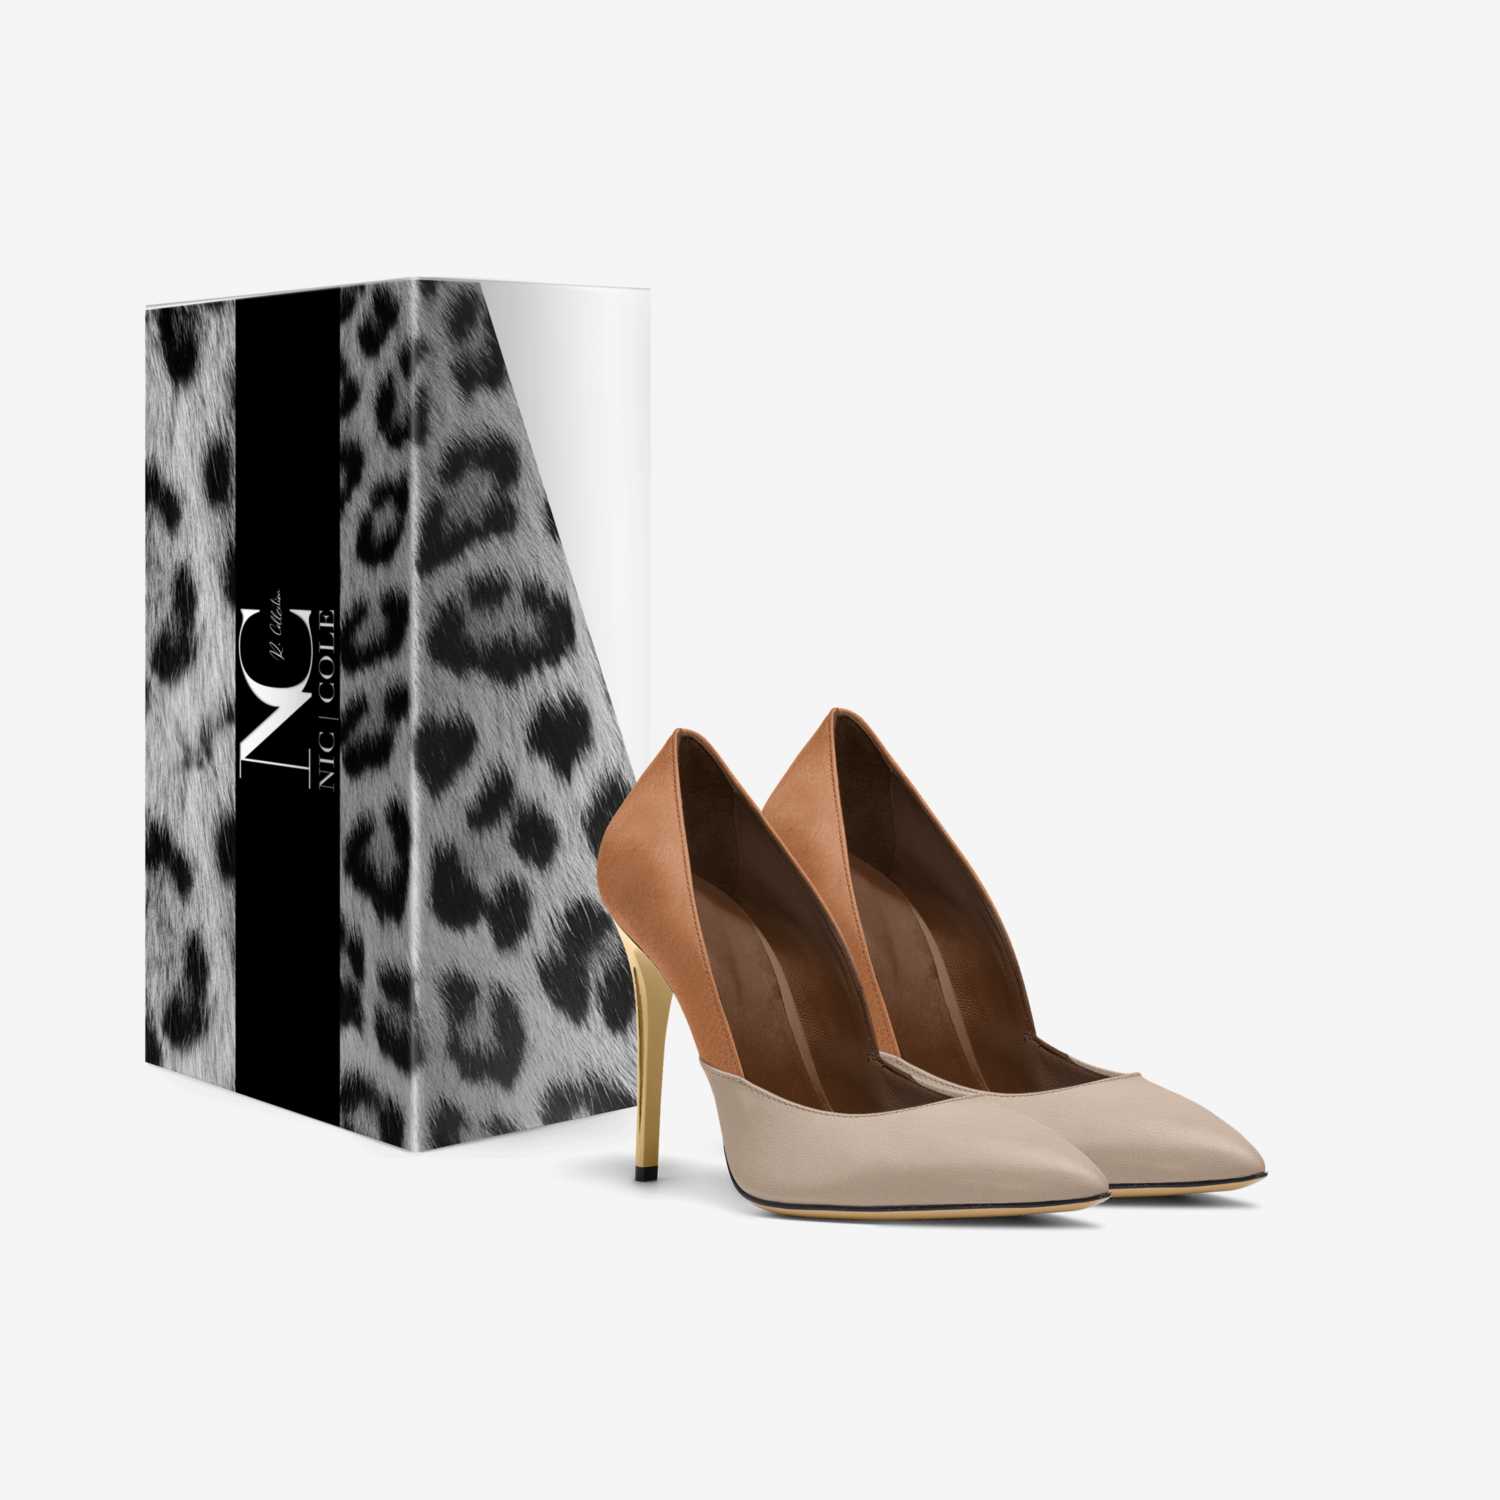 jenn custom made in Italy shoes by Kahmeel Callahan | Box view